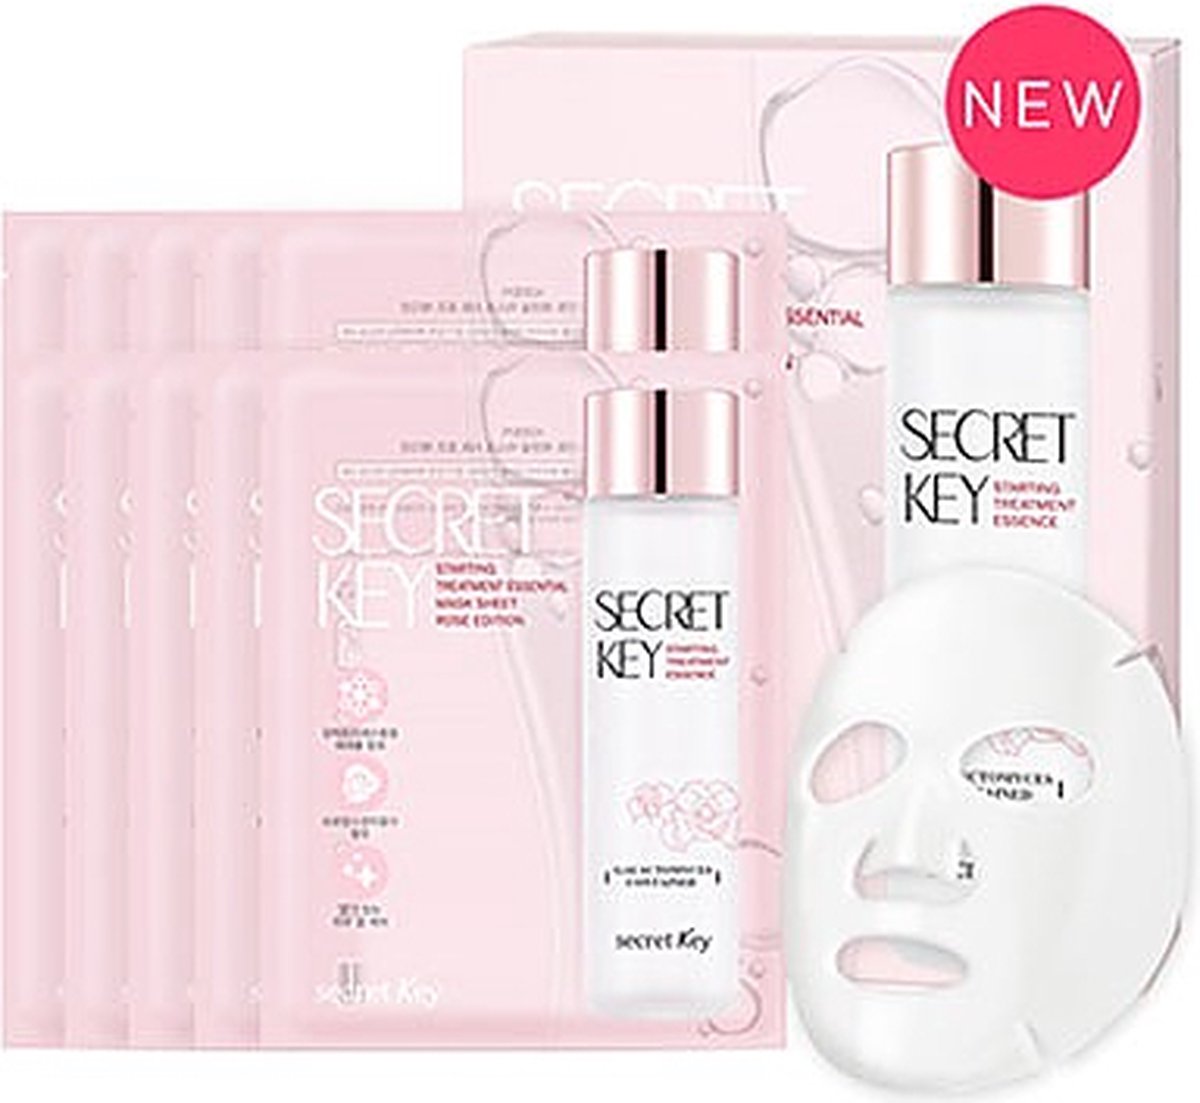 Secret Key - Starting treatment - Sheet Mask 10 stuks